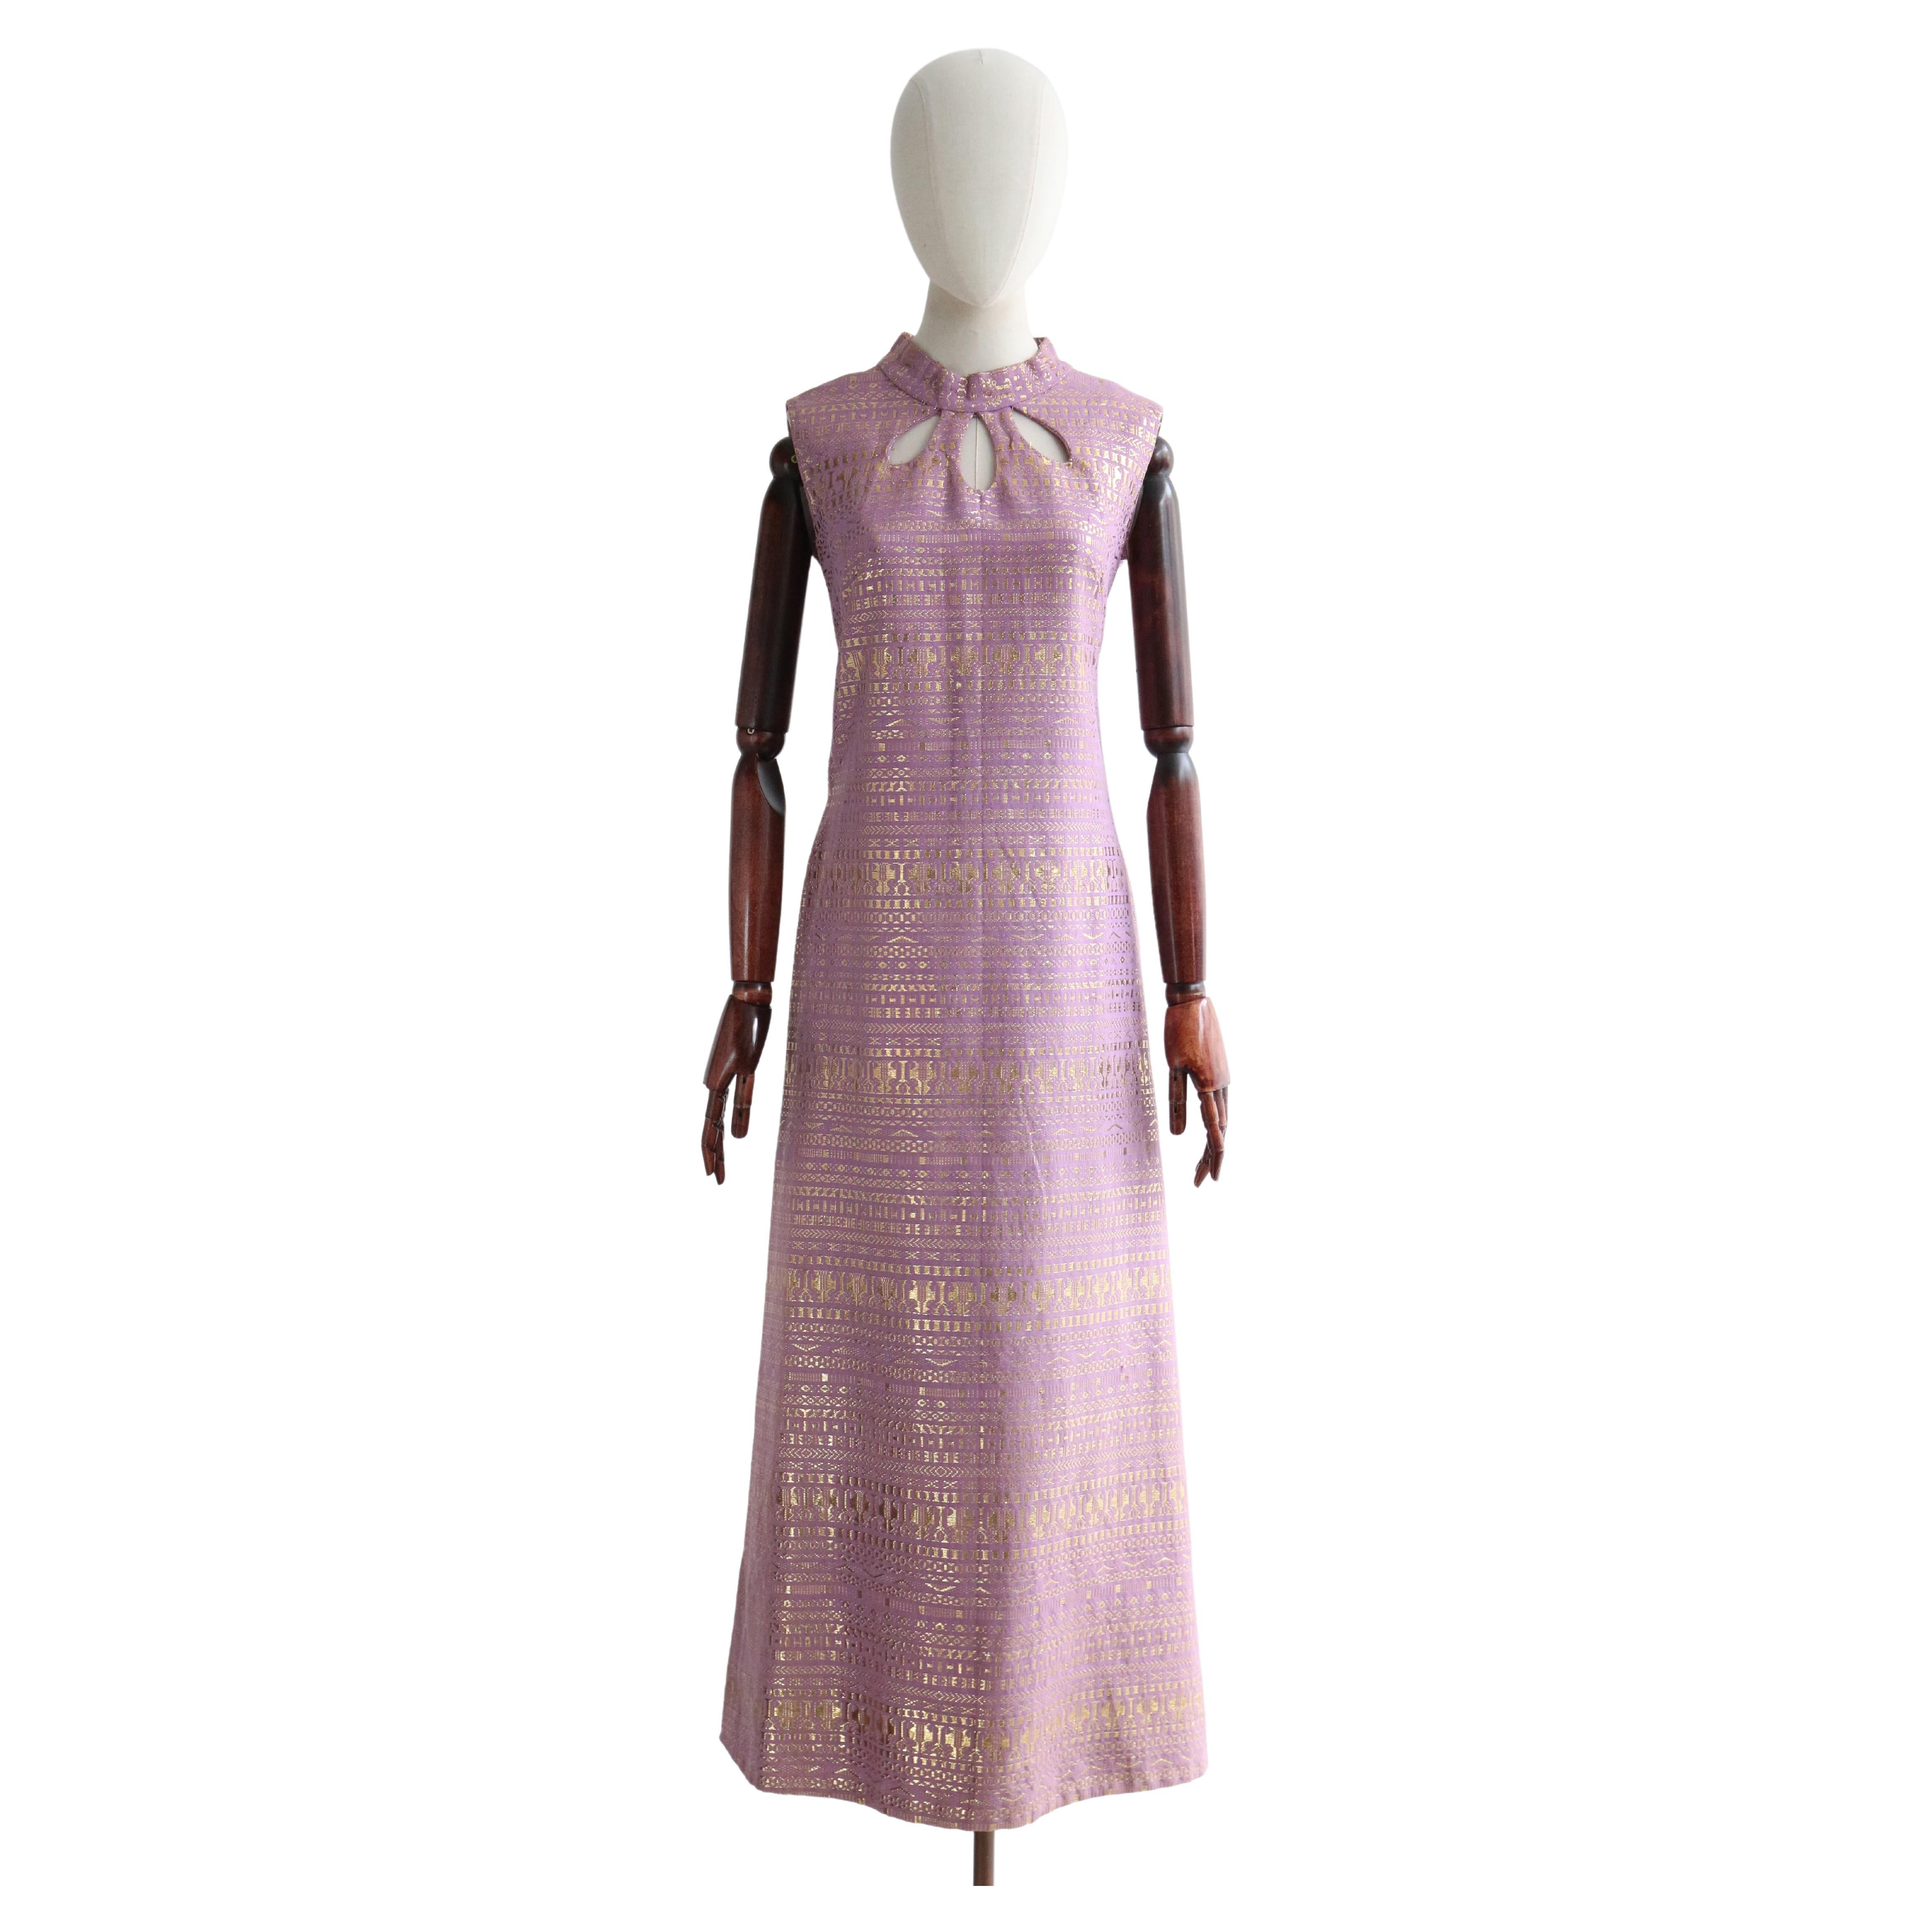 Vintage 1960's Lilac & Gold Lurex Keyhole Dress UK 12-14 US 8-10